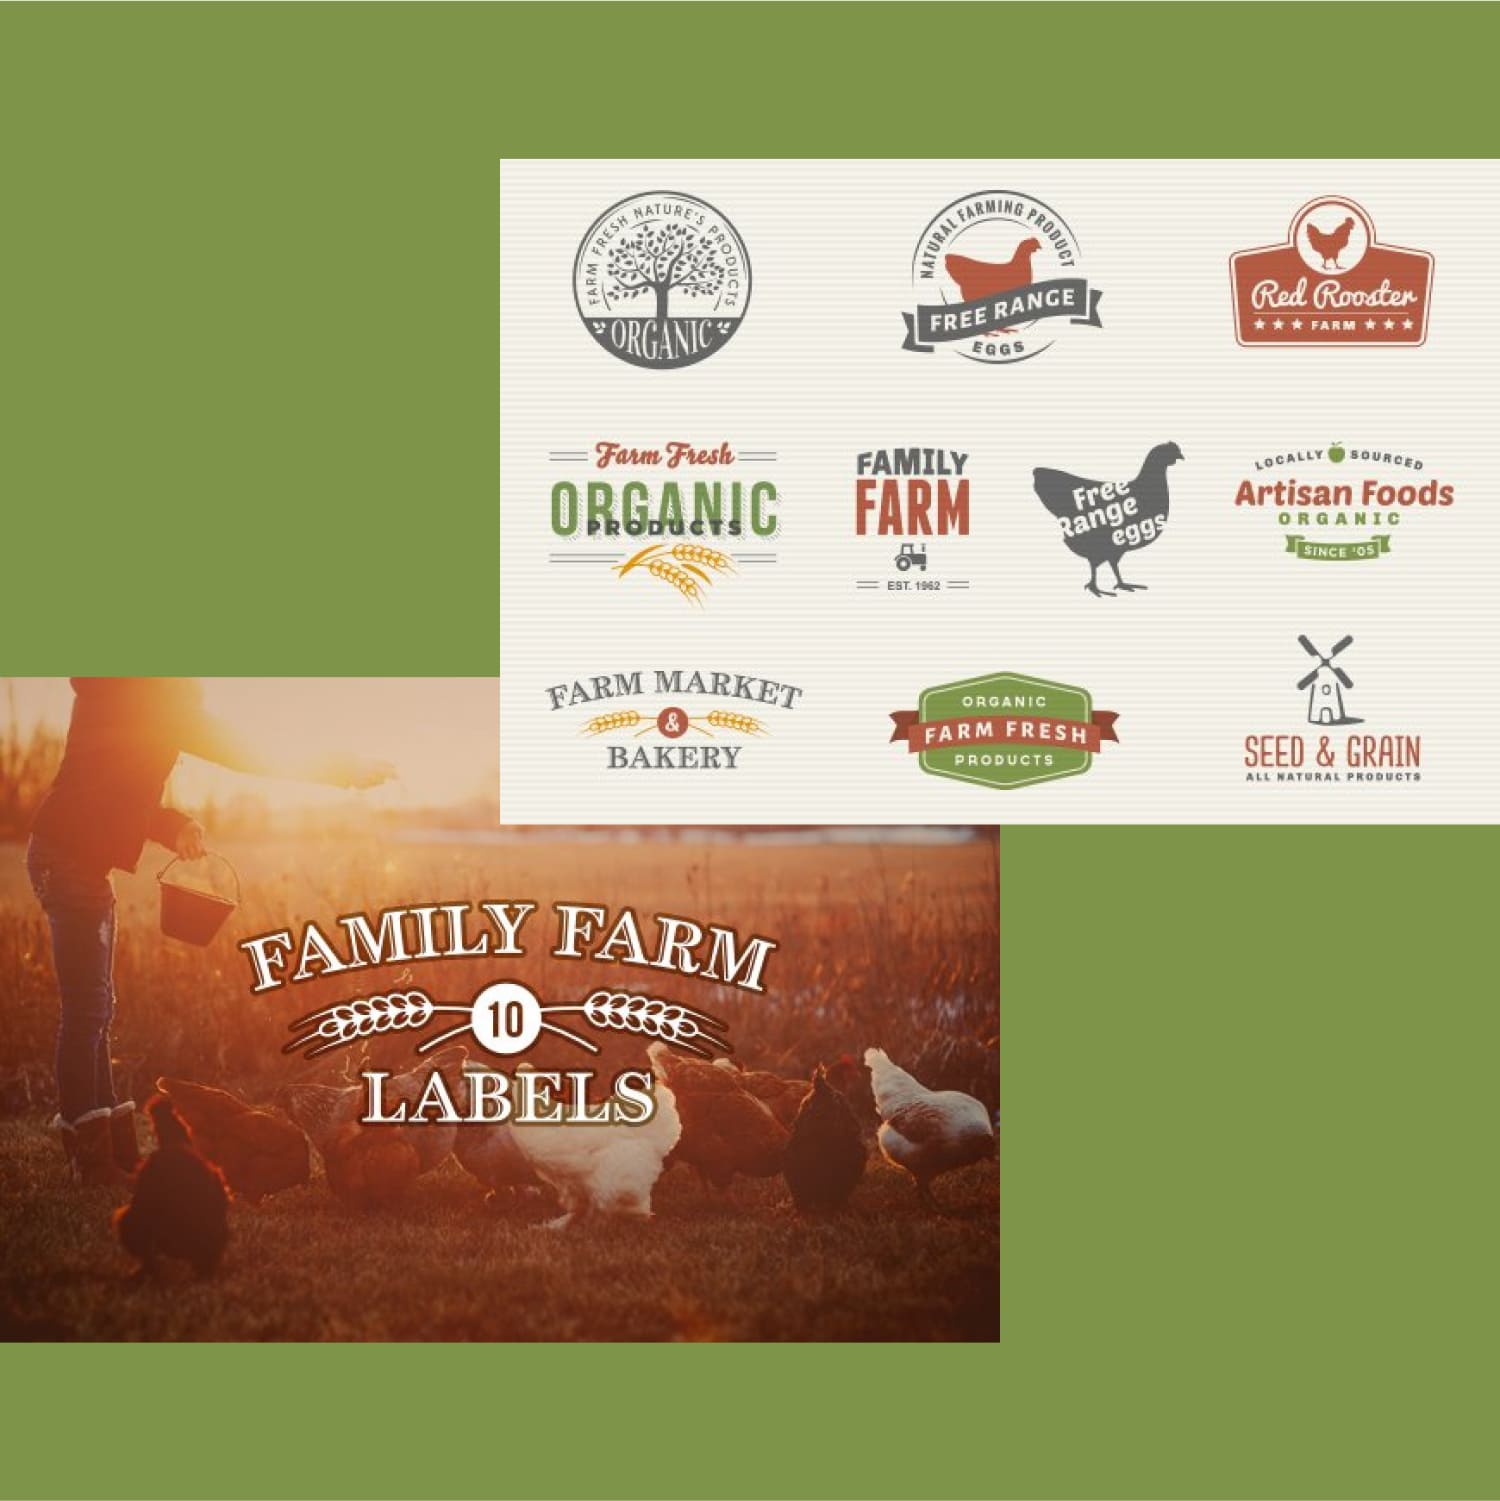 Family Farm Logos cover.